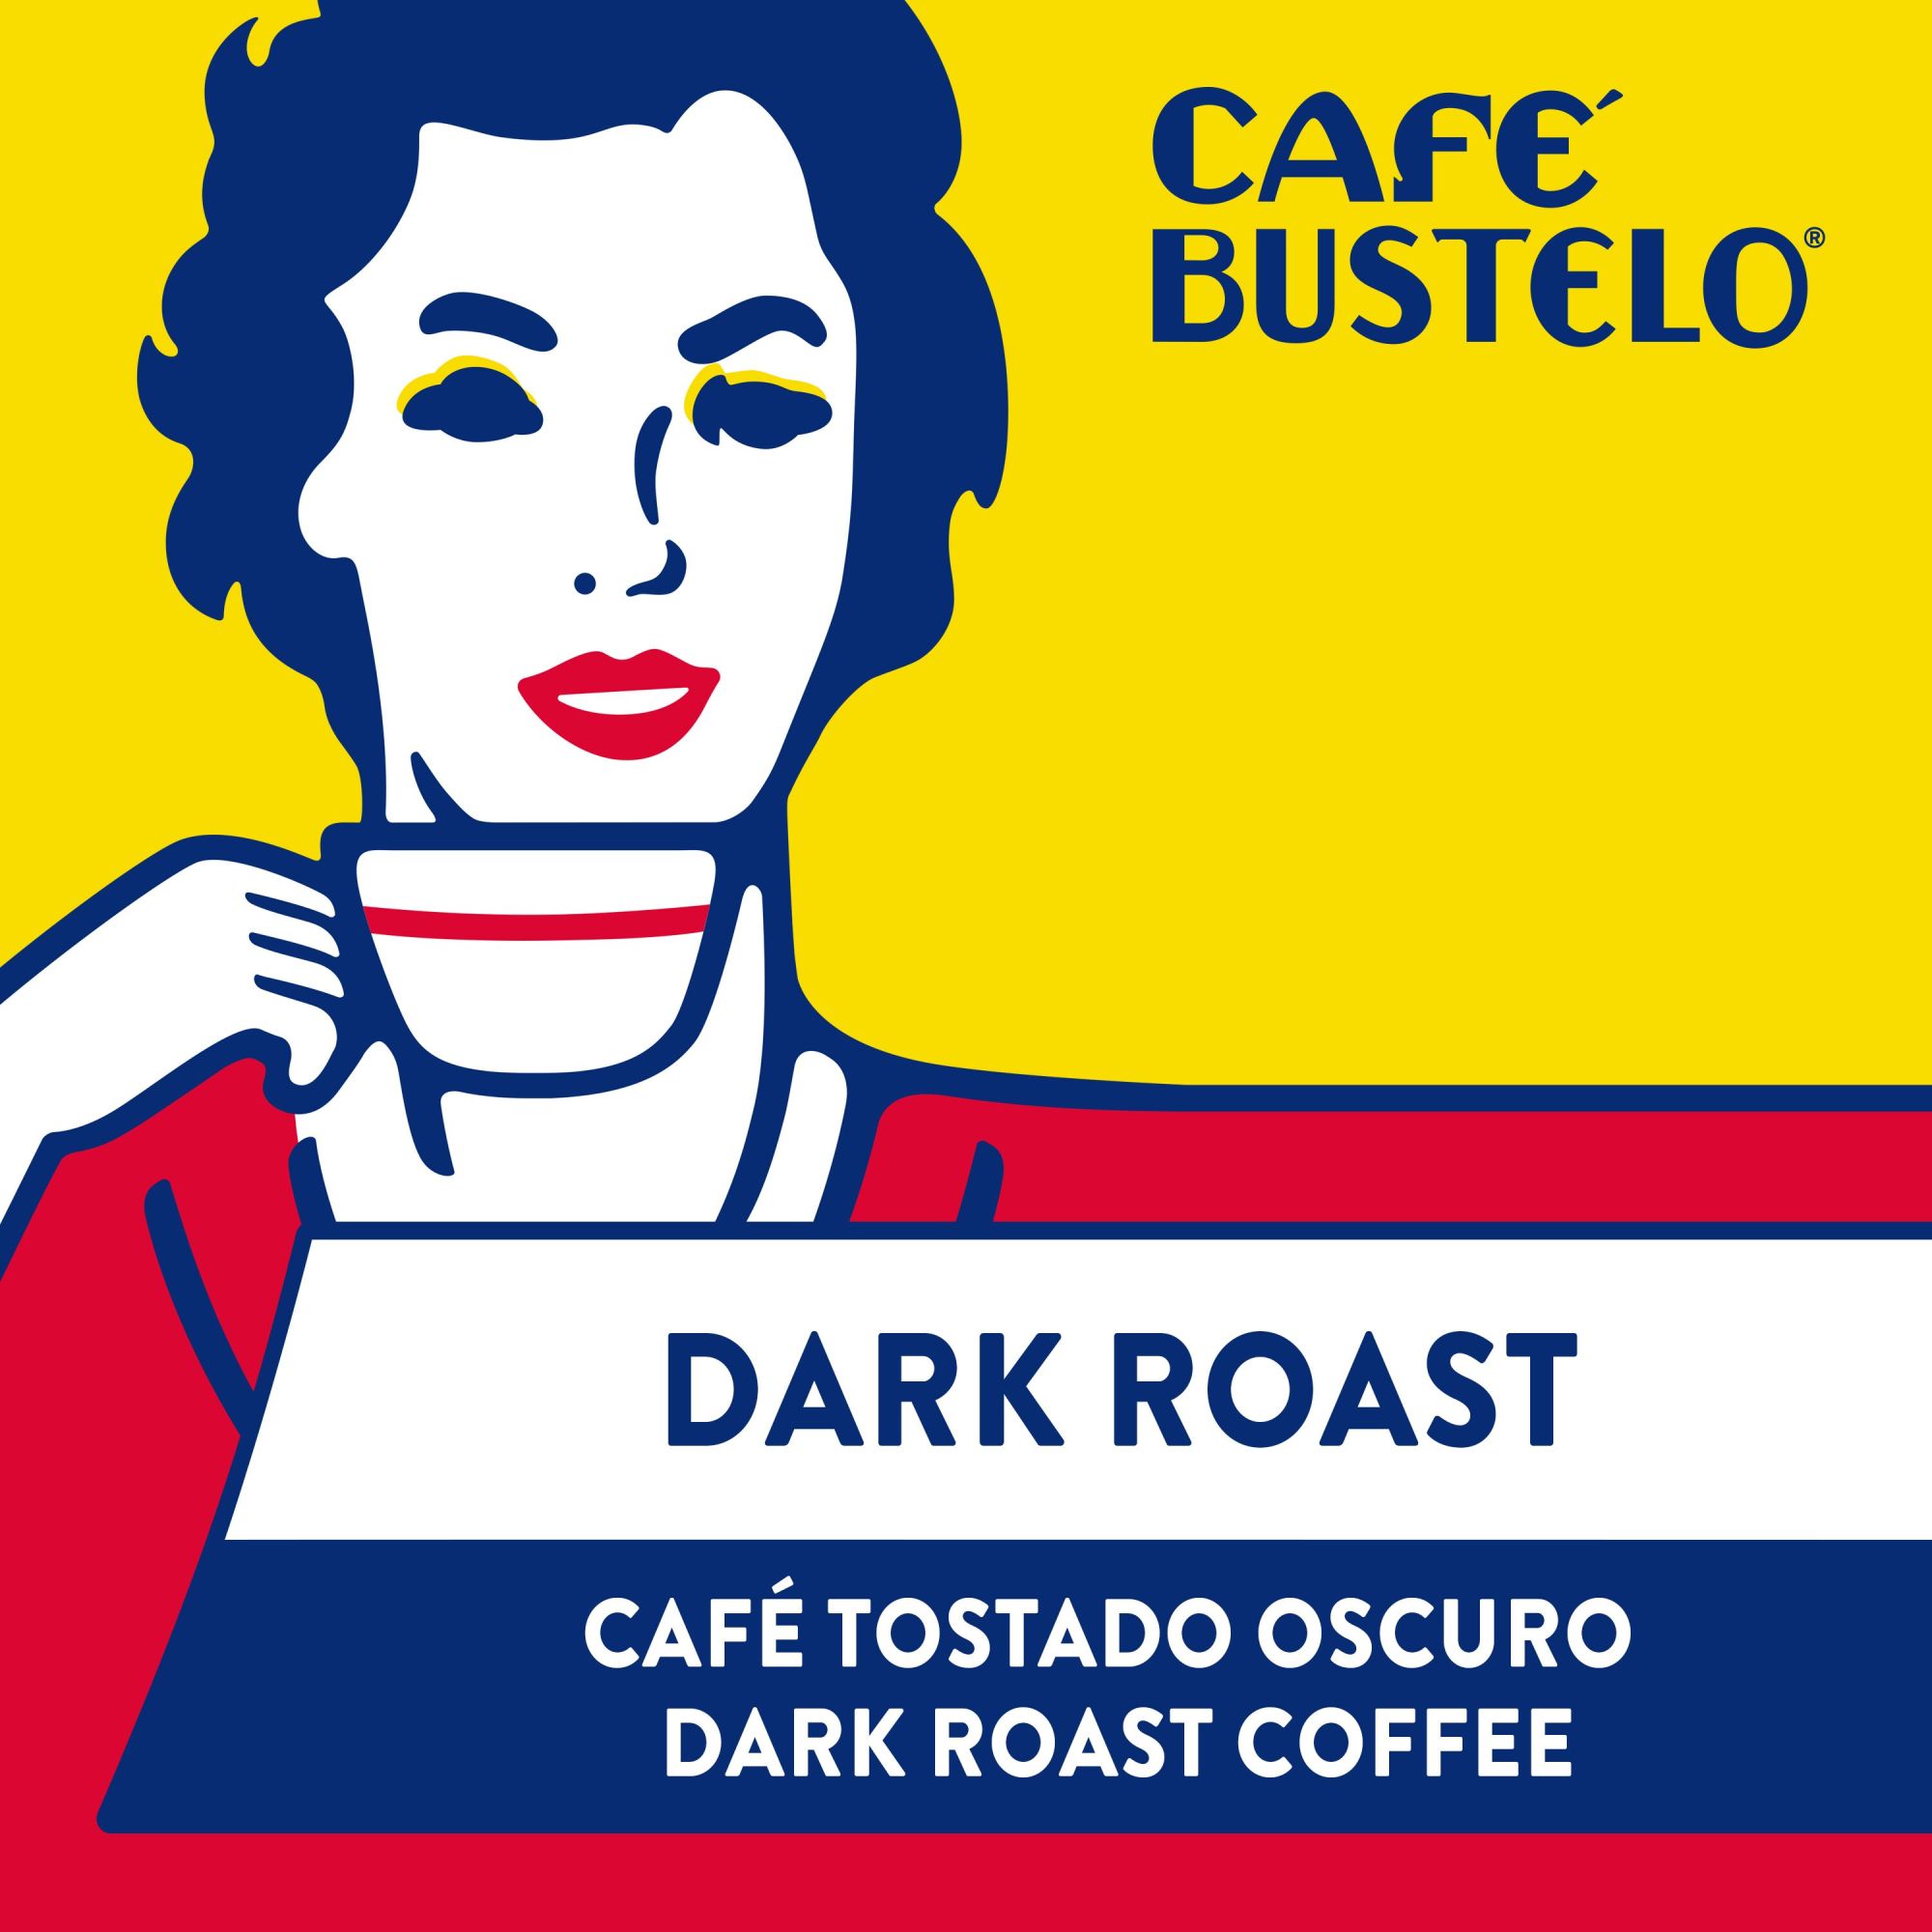 Caf Bustelo, Espresso Style Dark Roast Ground Coffee, Vacuum-Packed 10 oz. Brick - image 4 of 7